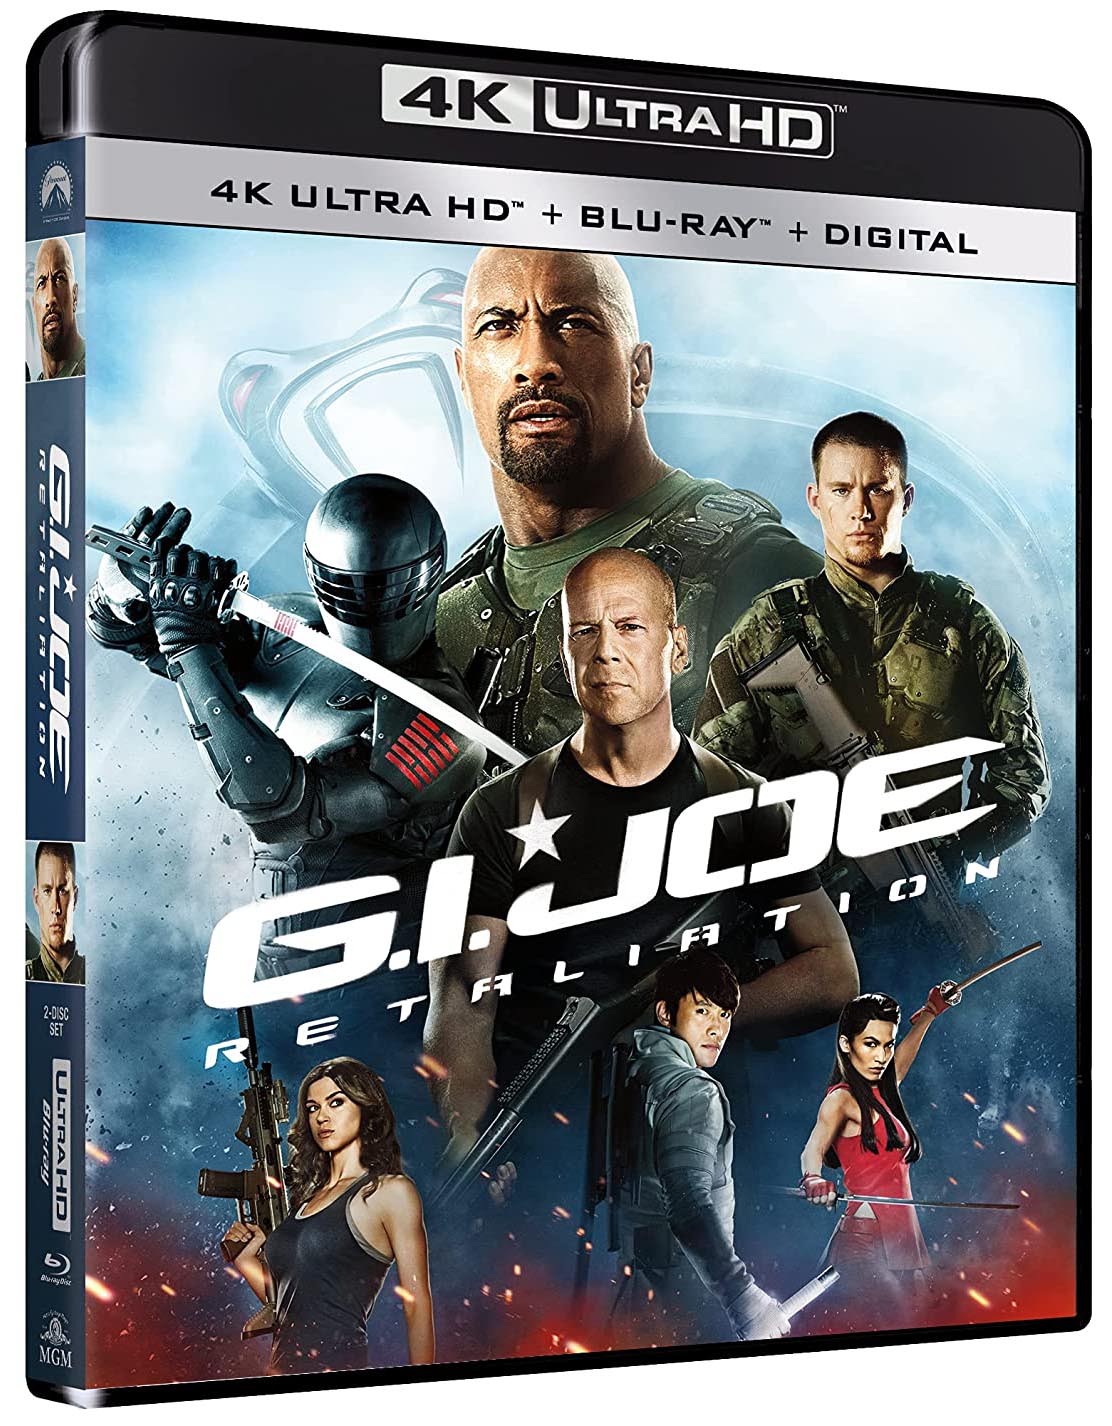 GI Joe Retaliation 4k Blu-ray